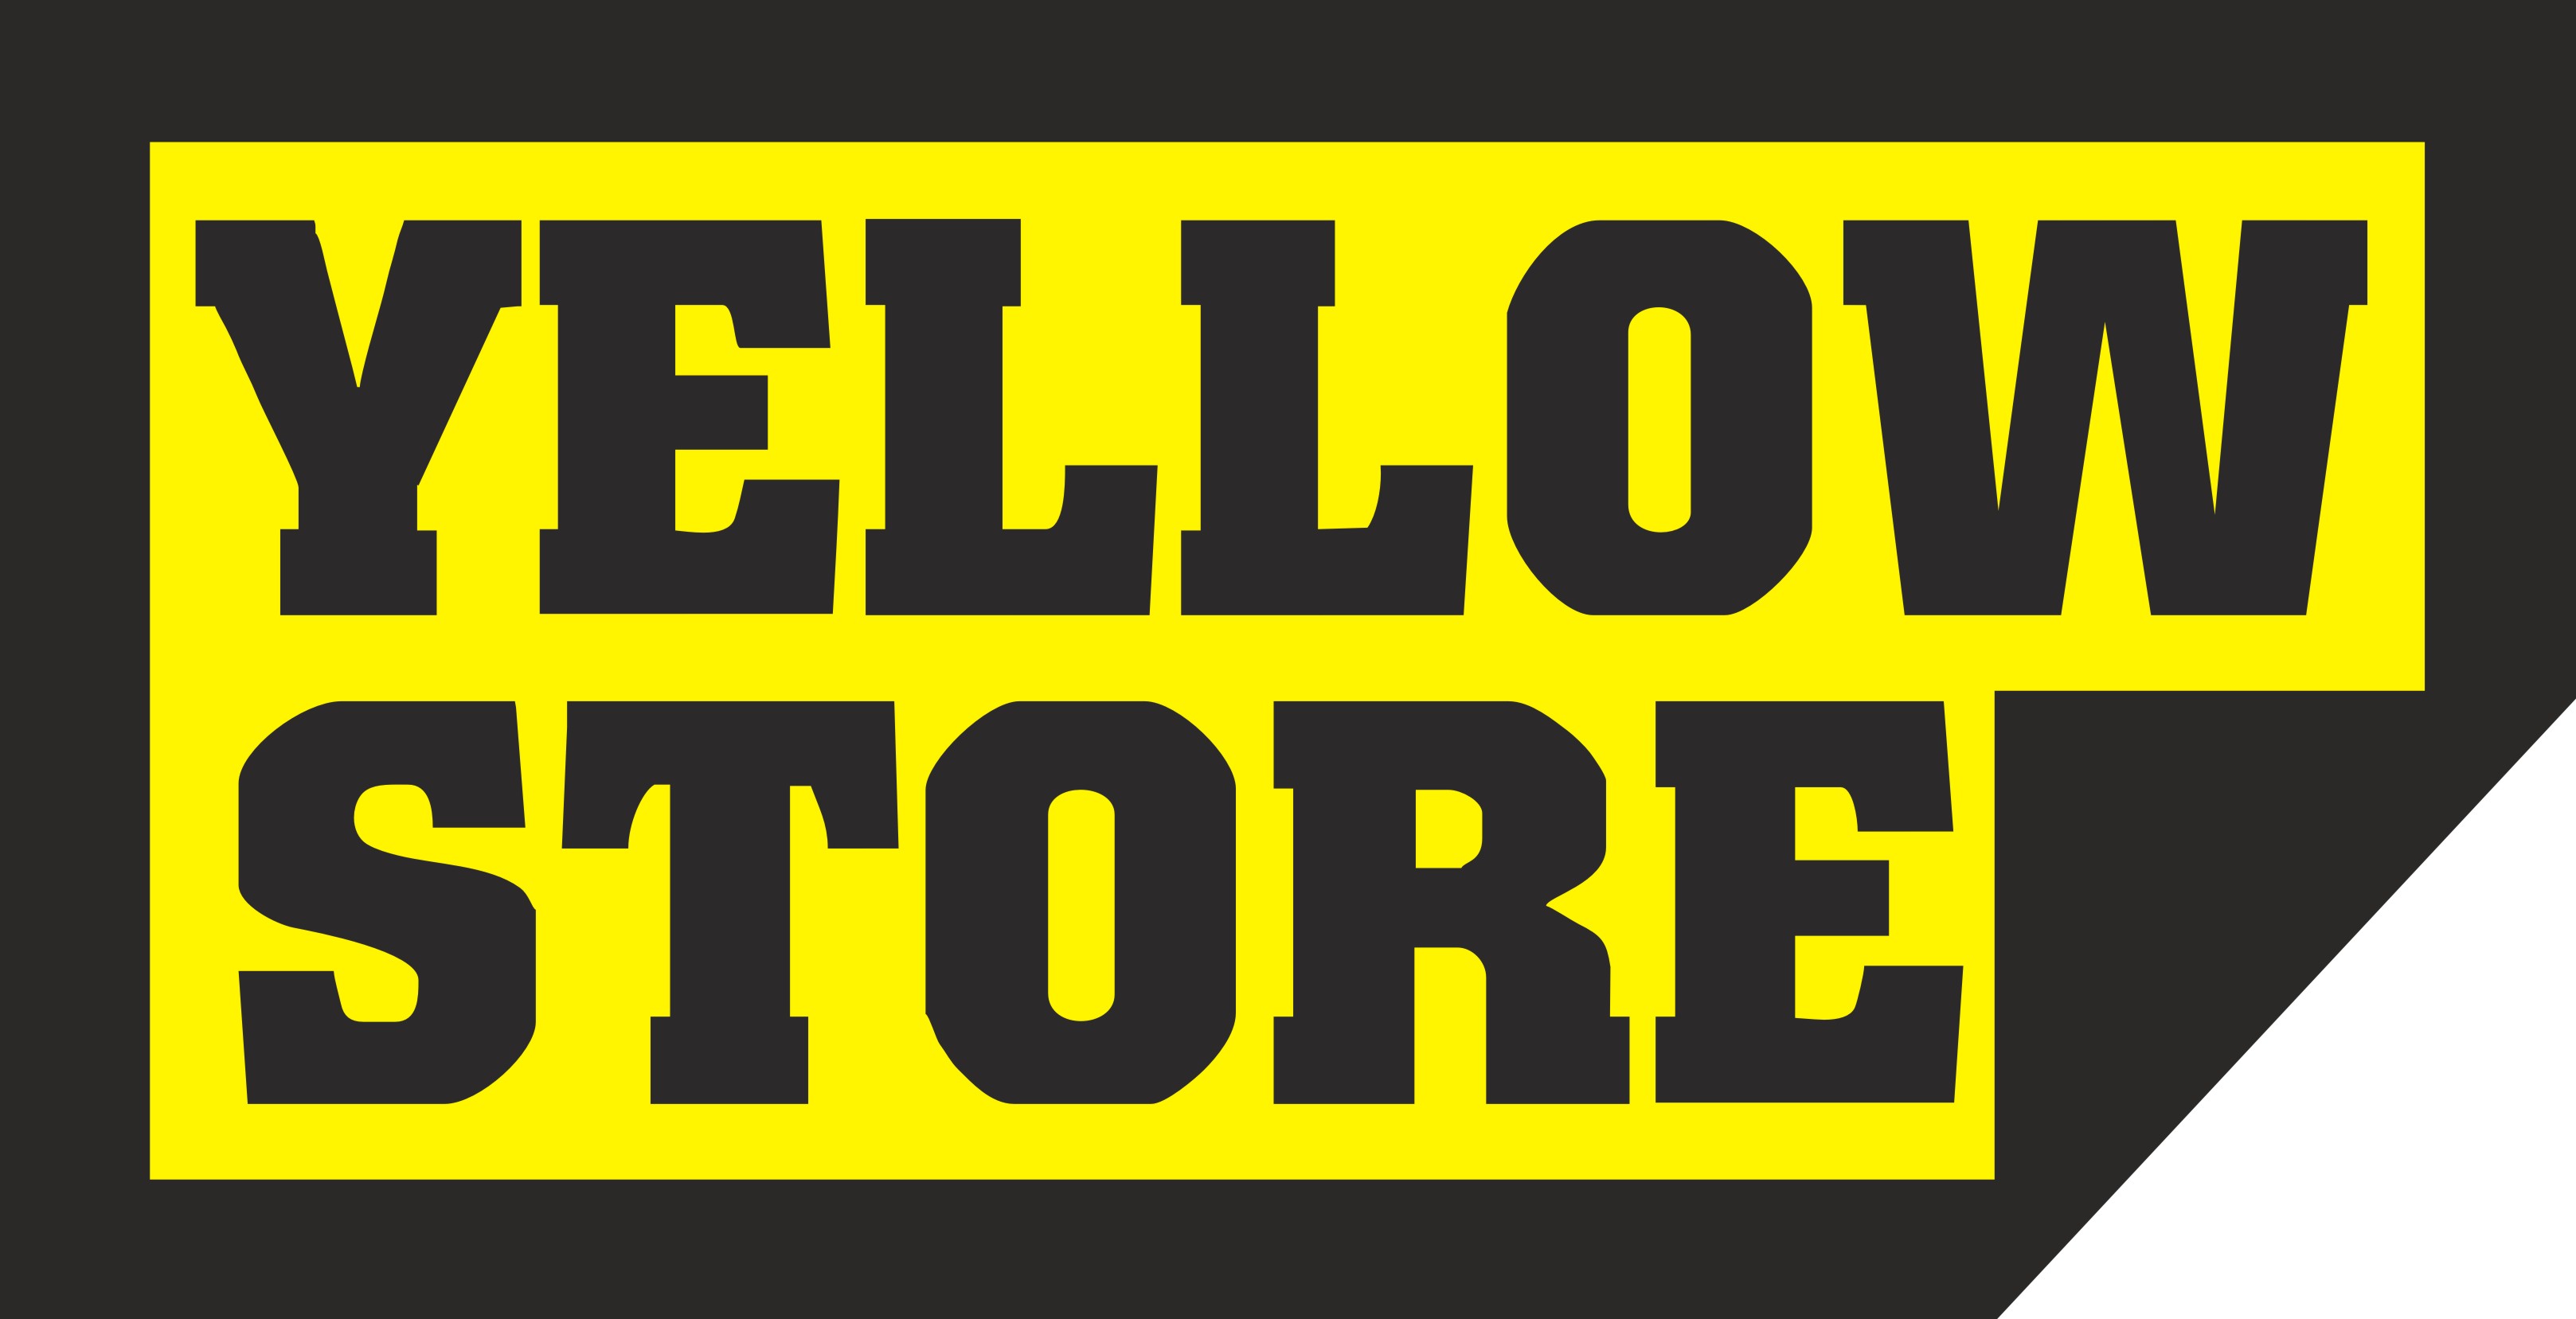 Yellow Store chega ao mercado propondo ineditismo